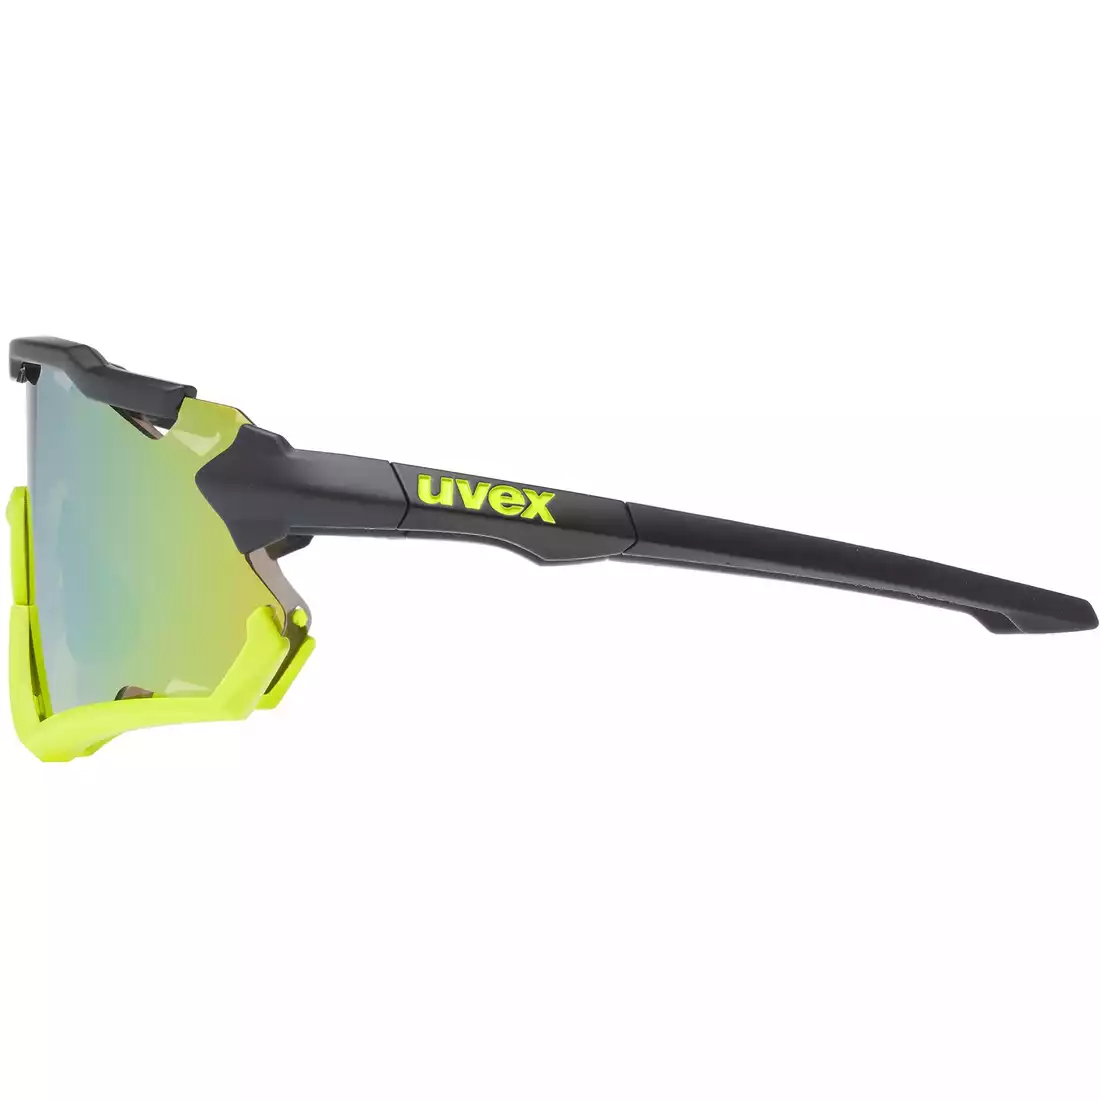 UVEX ochelari de protecție pentru sport Sportstyle 228 mirror yellow (S3), negru-fluor